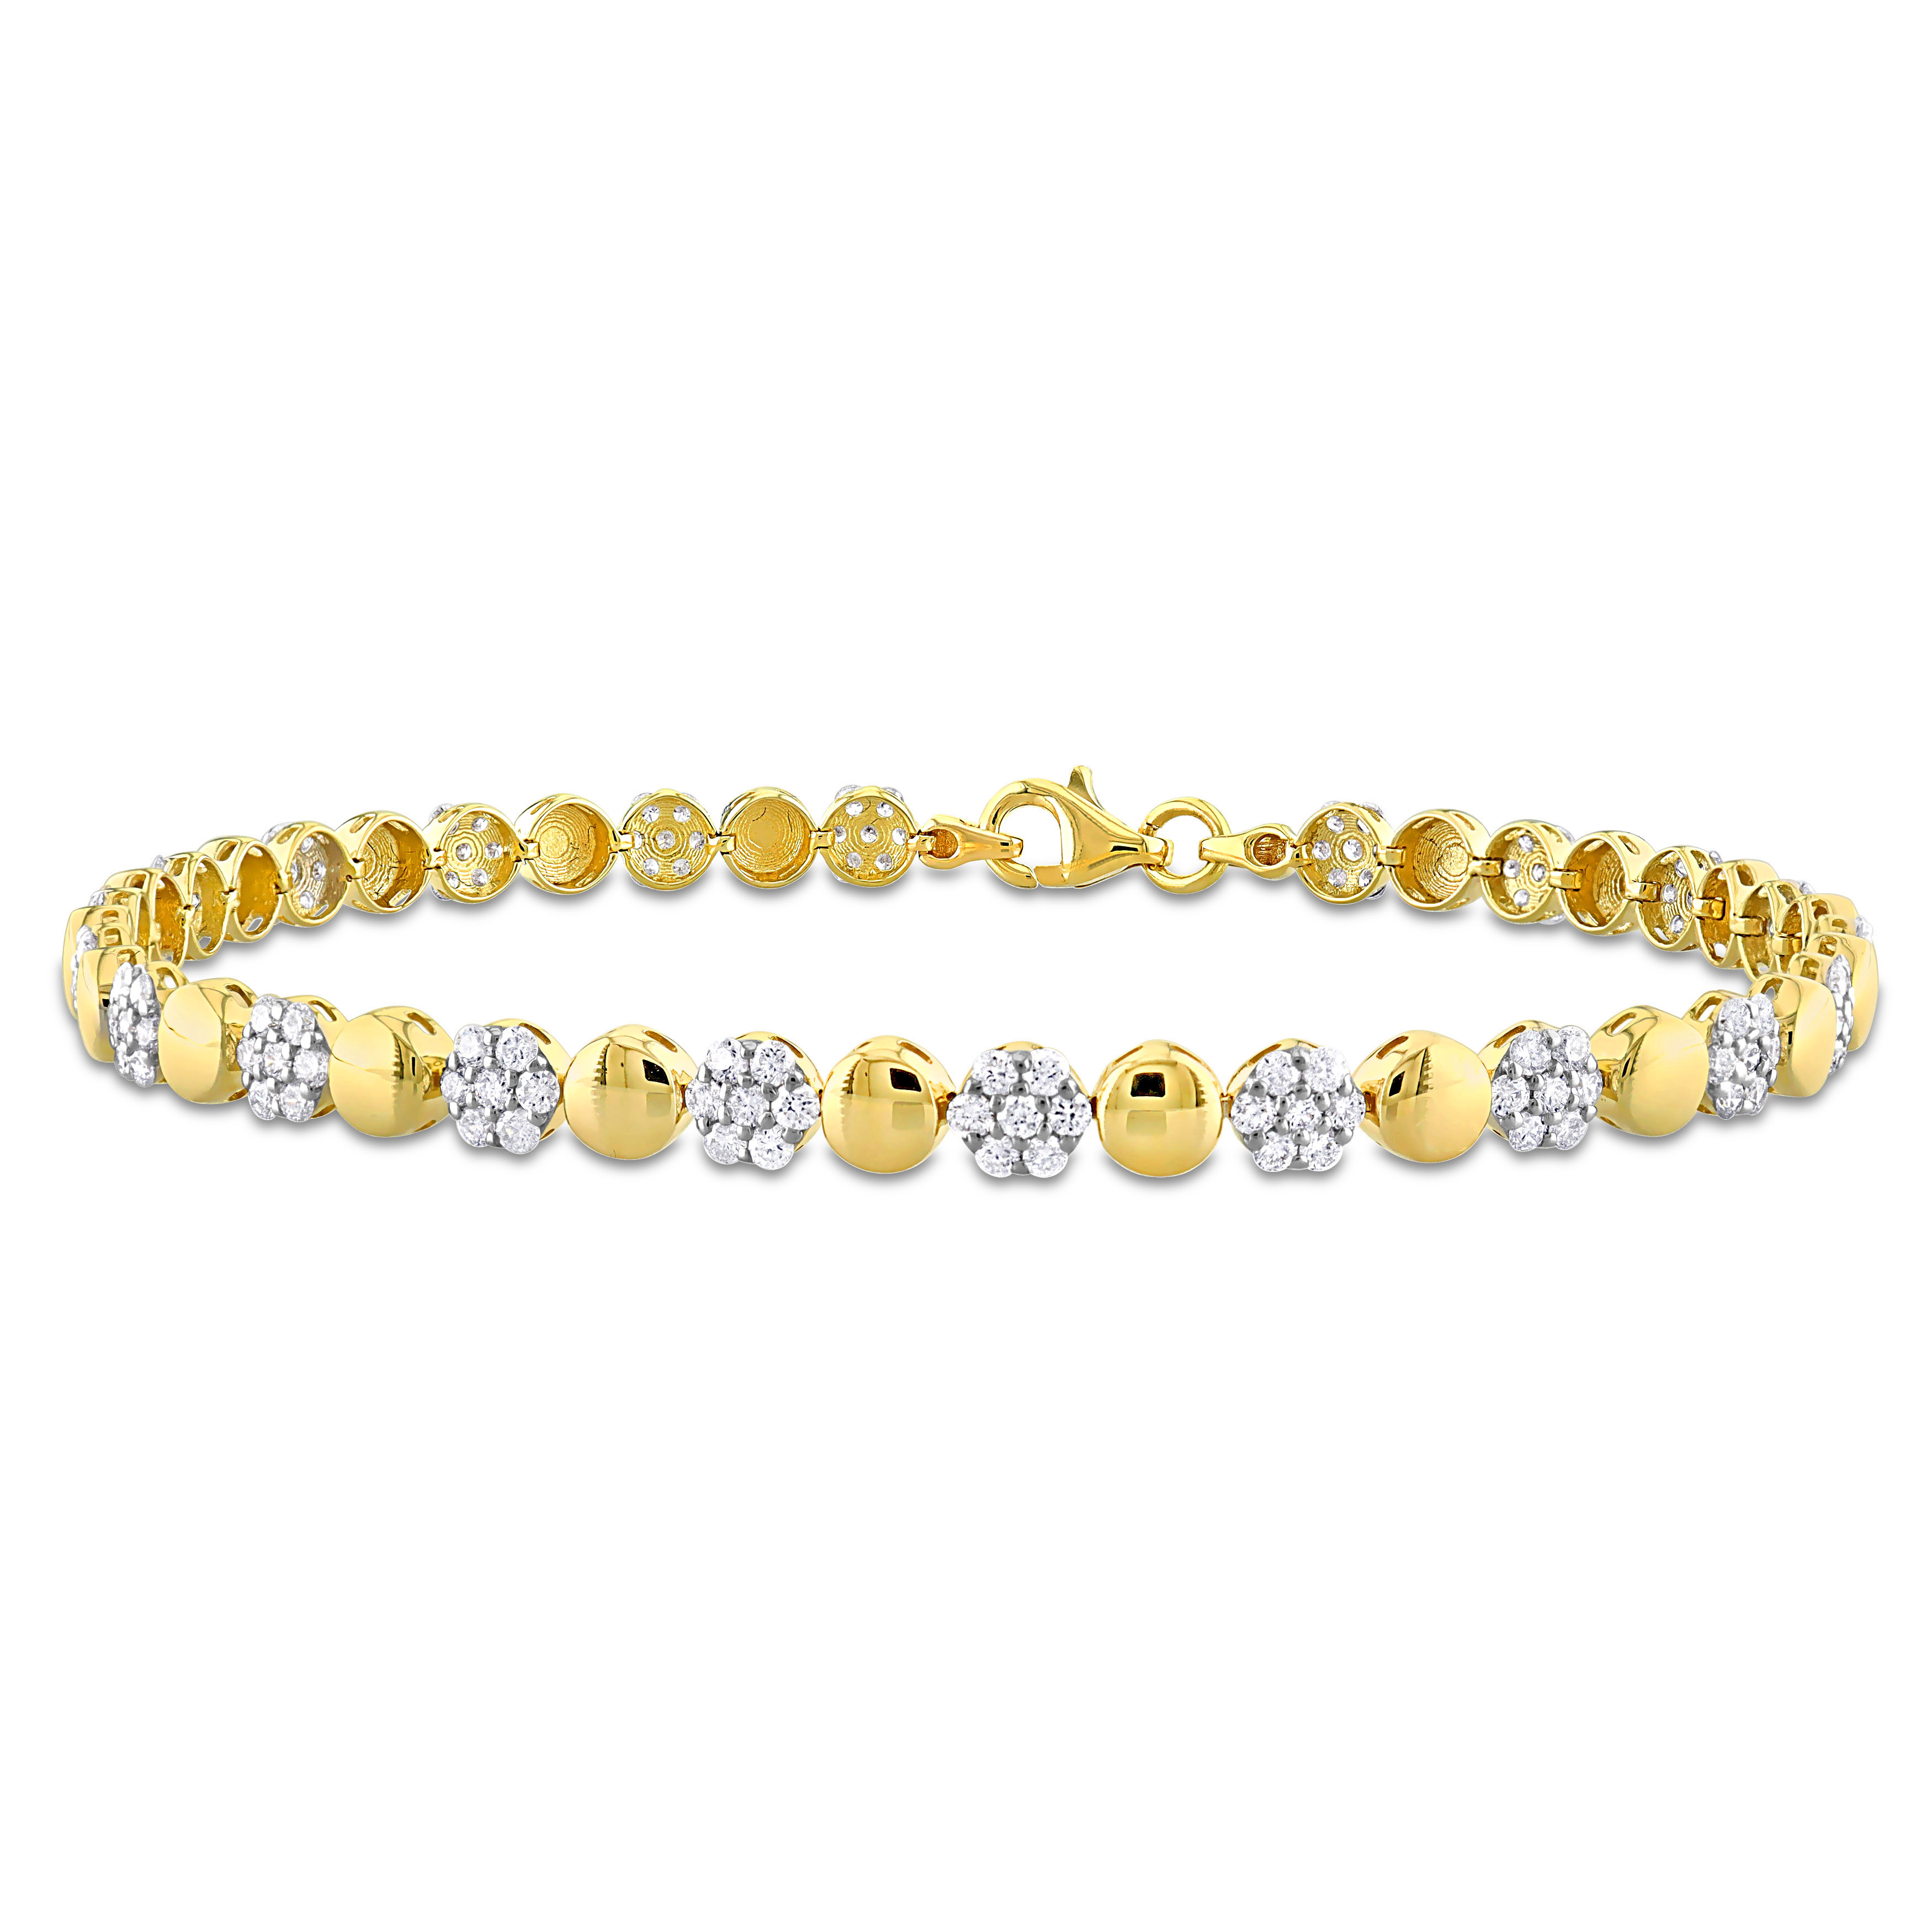 1 3/4 CT TDW Diamond Circle and Flower Design Tennis Bracelet in 10k Yellow Gold - 7.5 in.